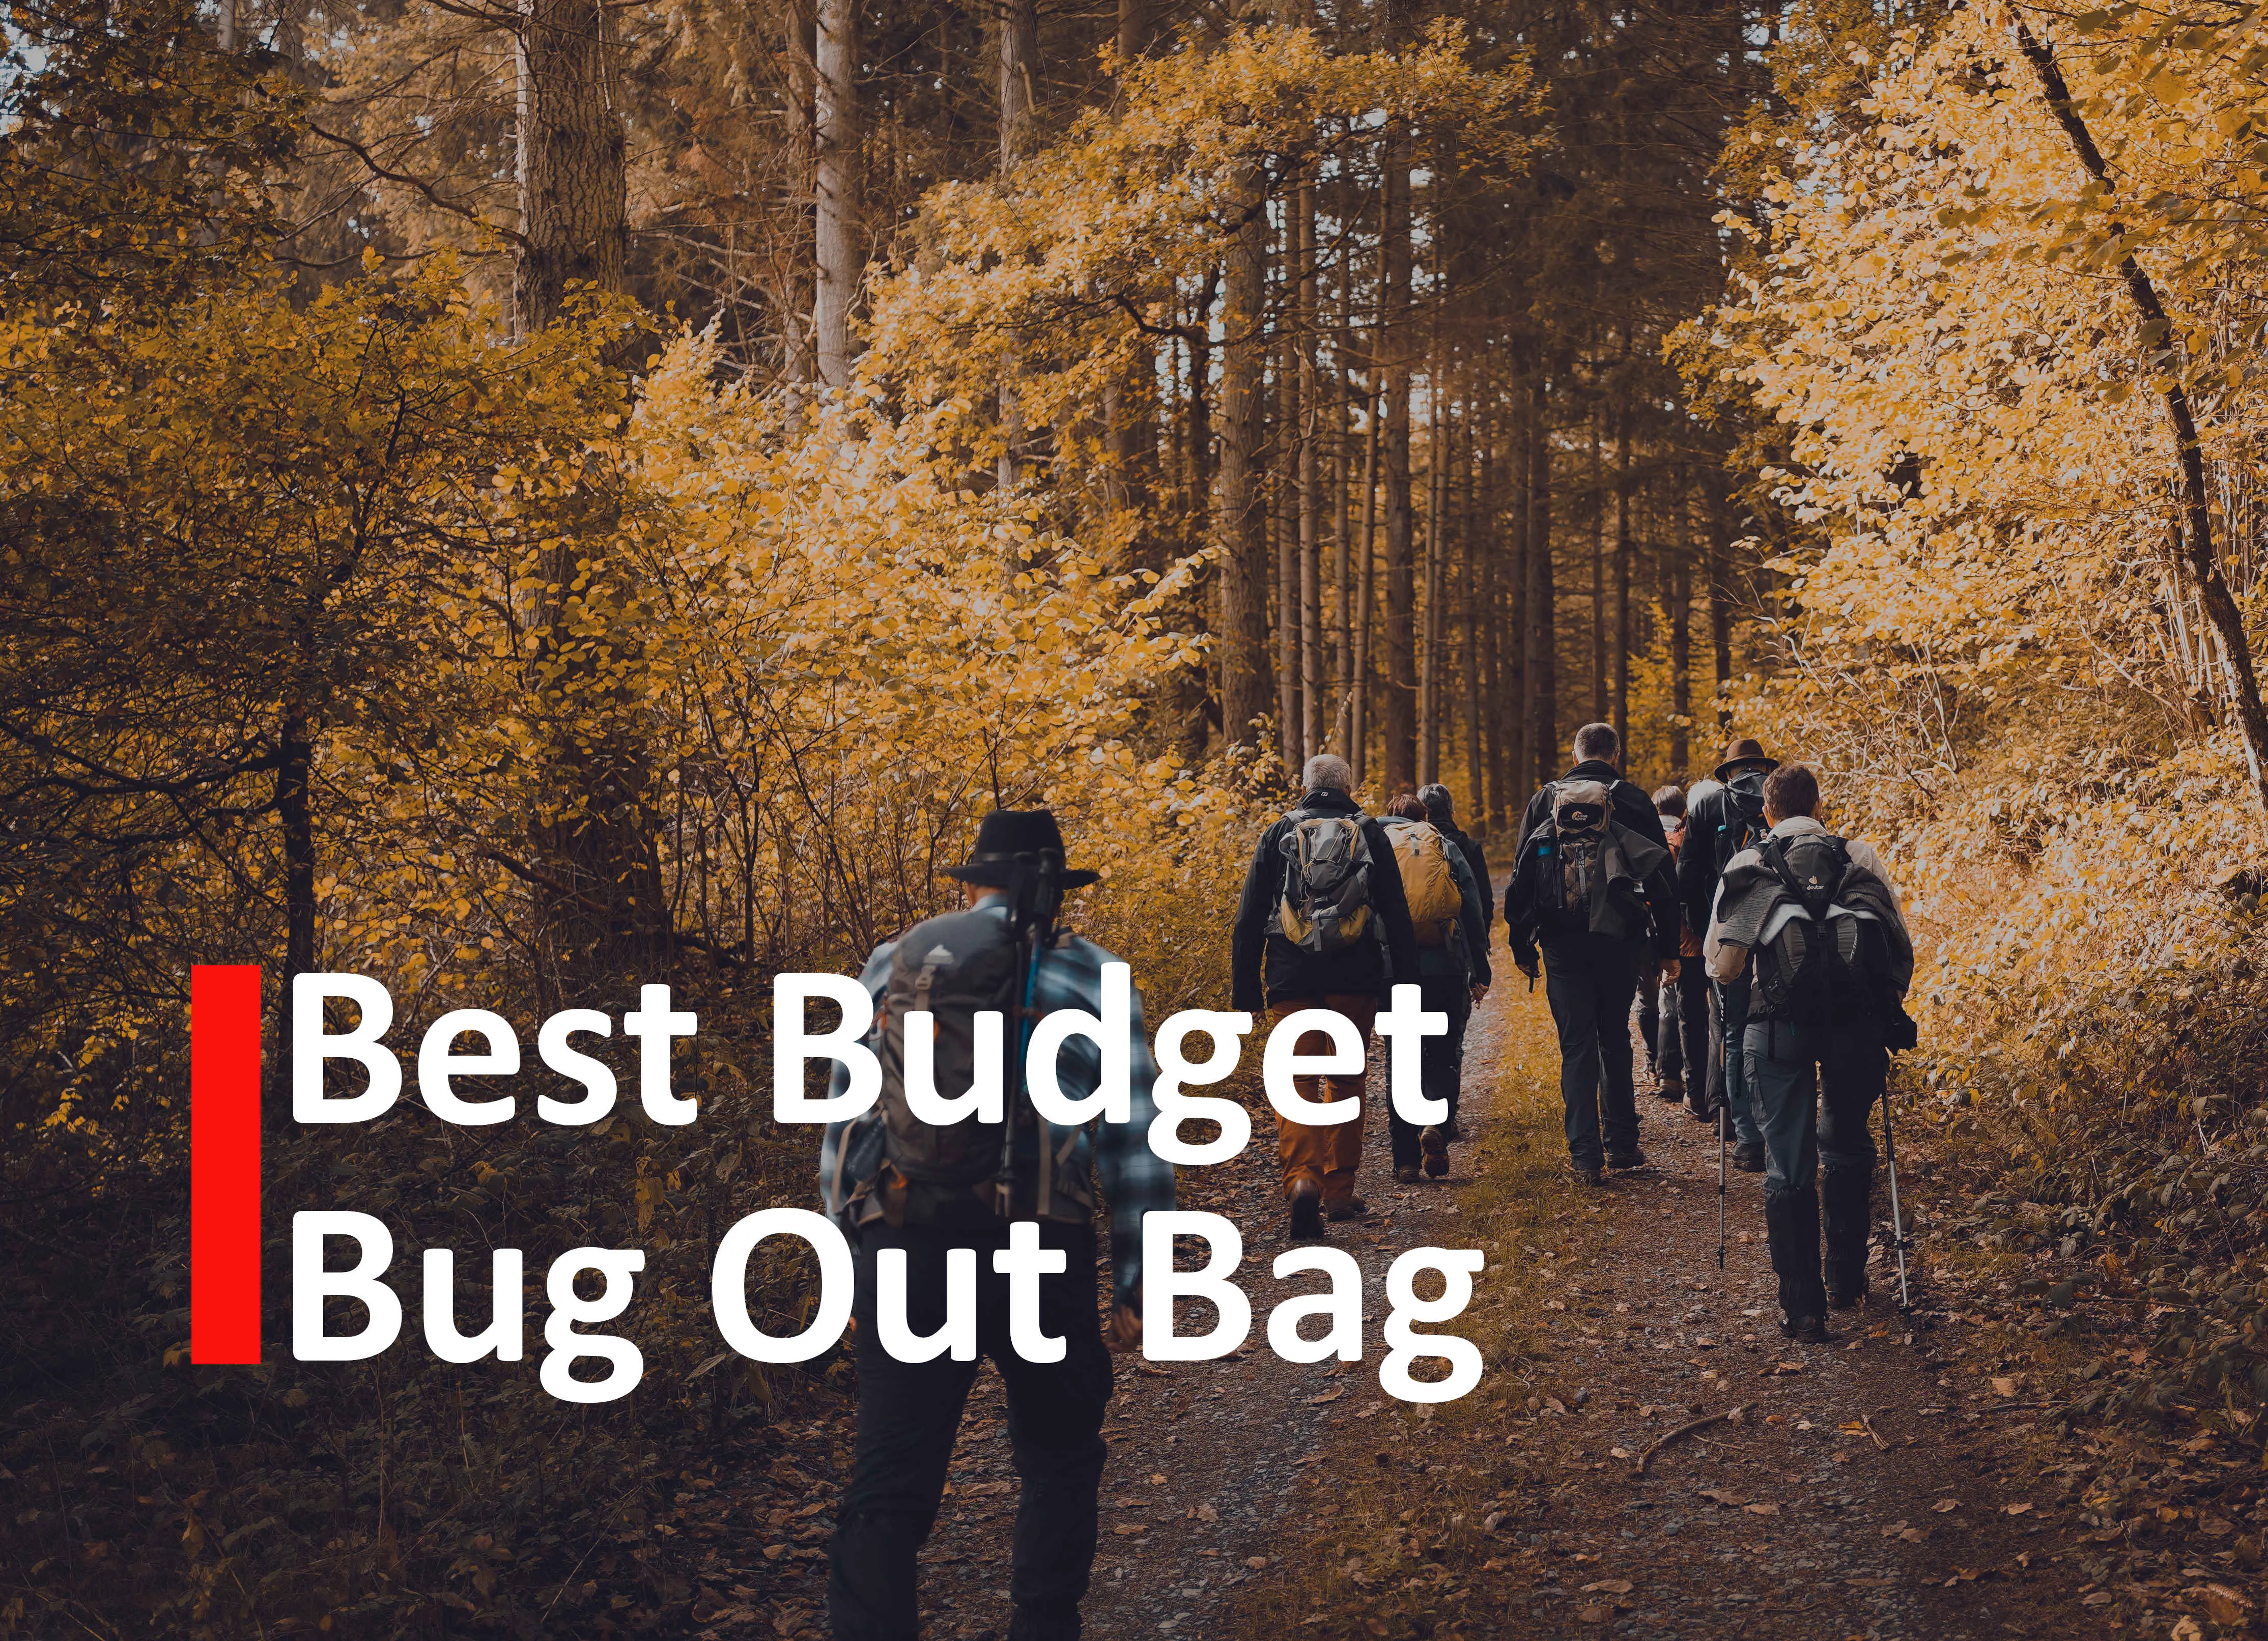 Best budget bug out bag title image